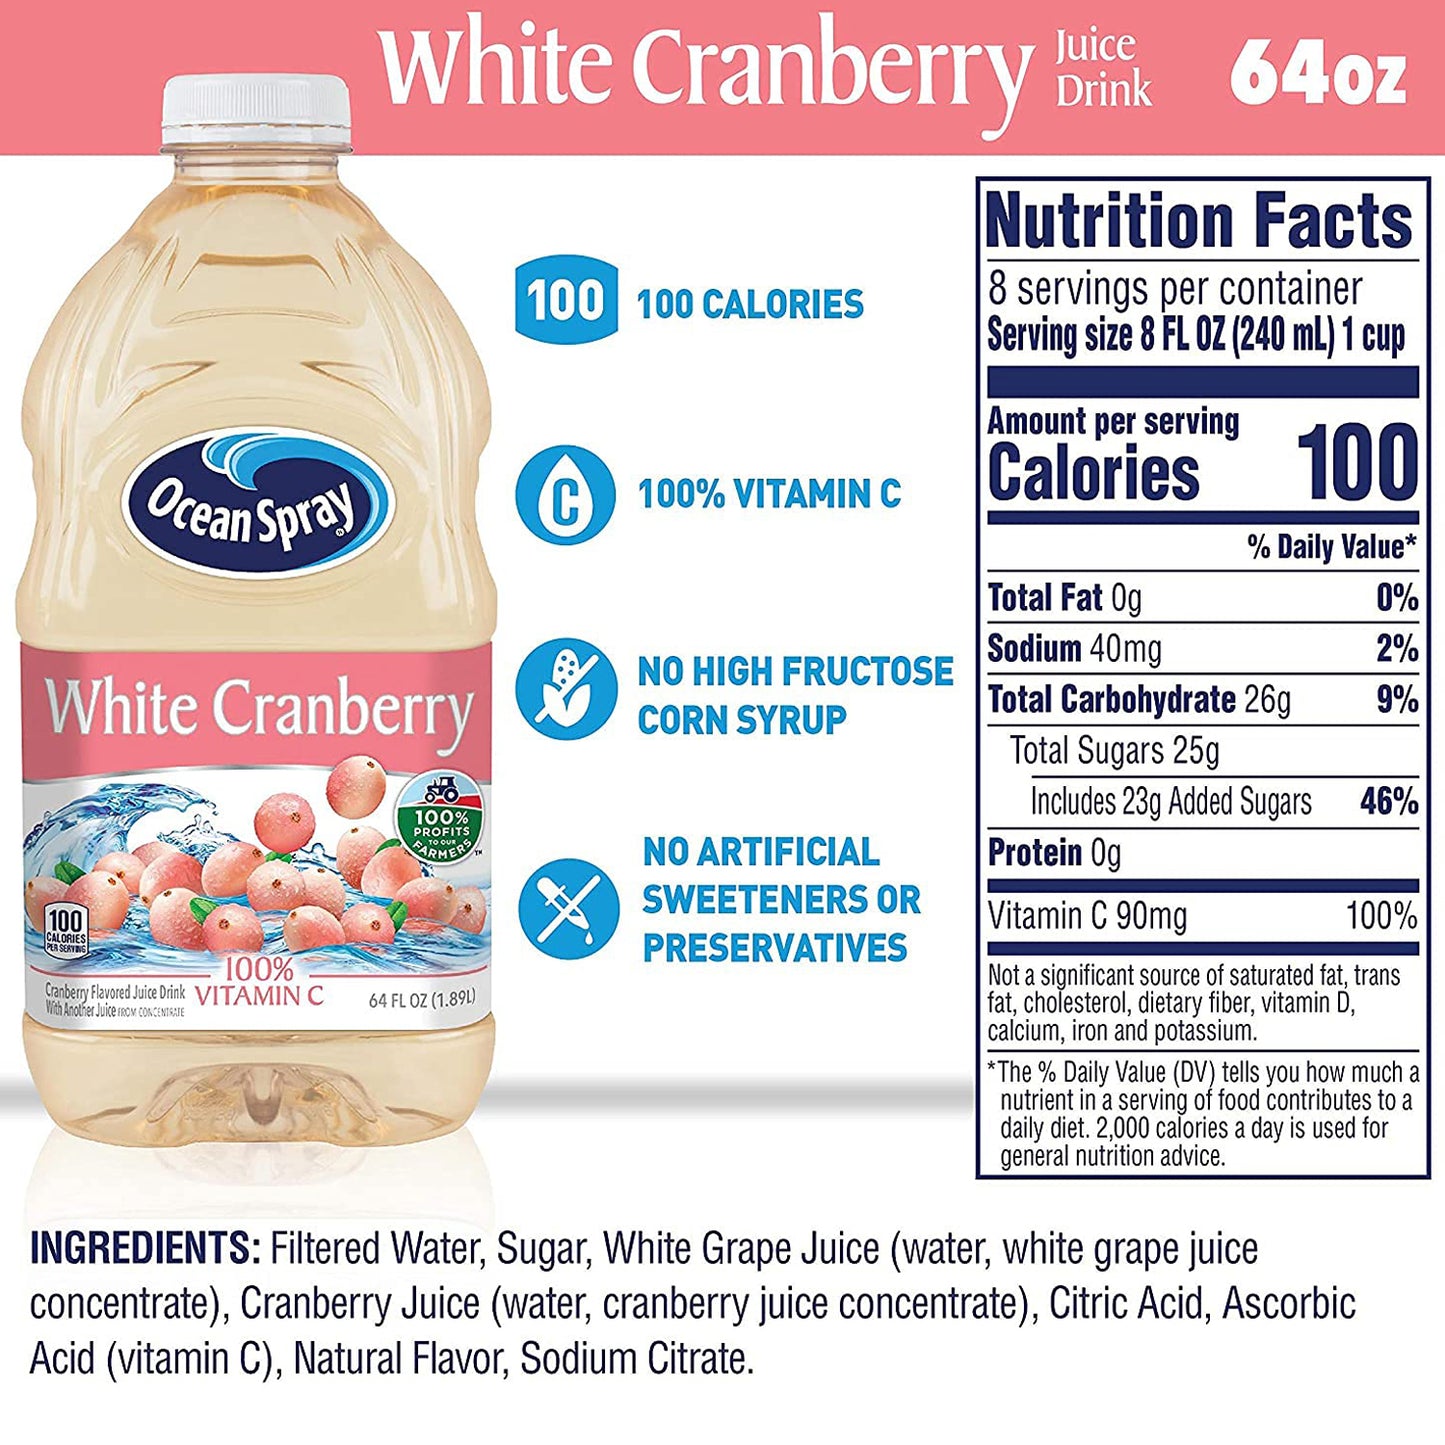 White Cranberry Juice Drink